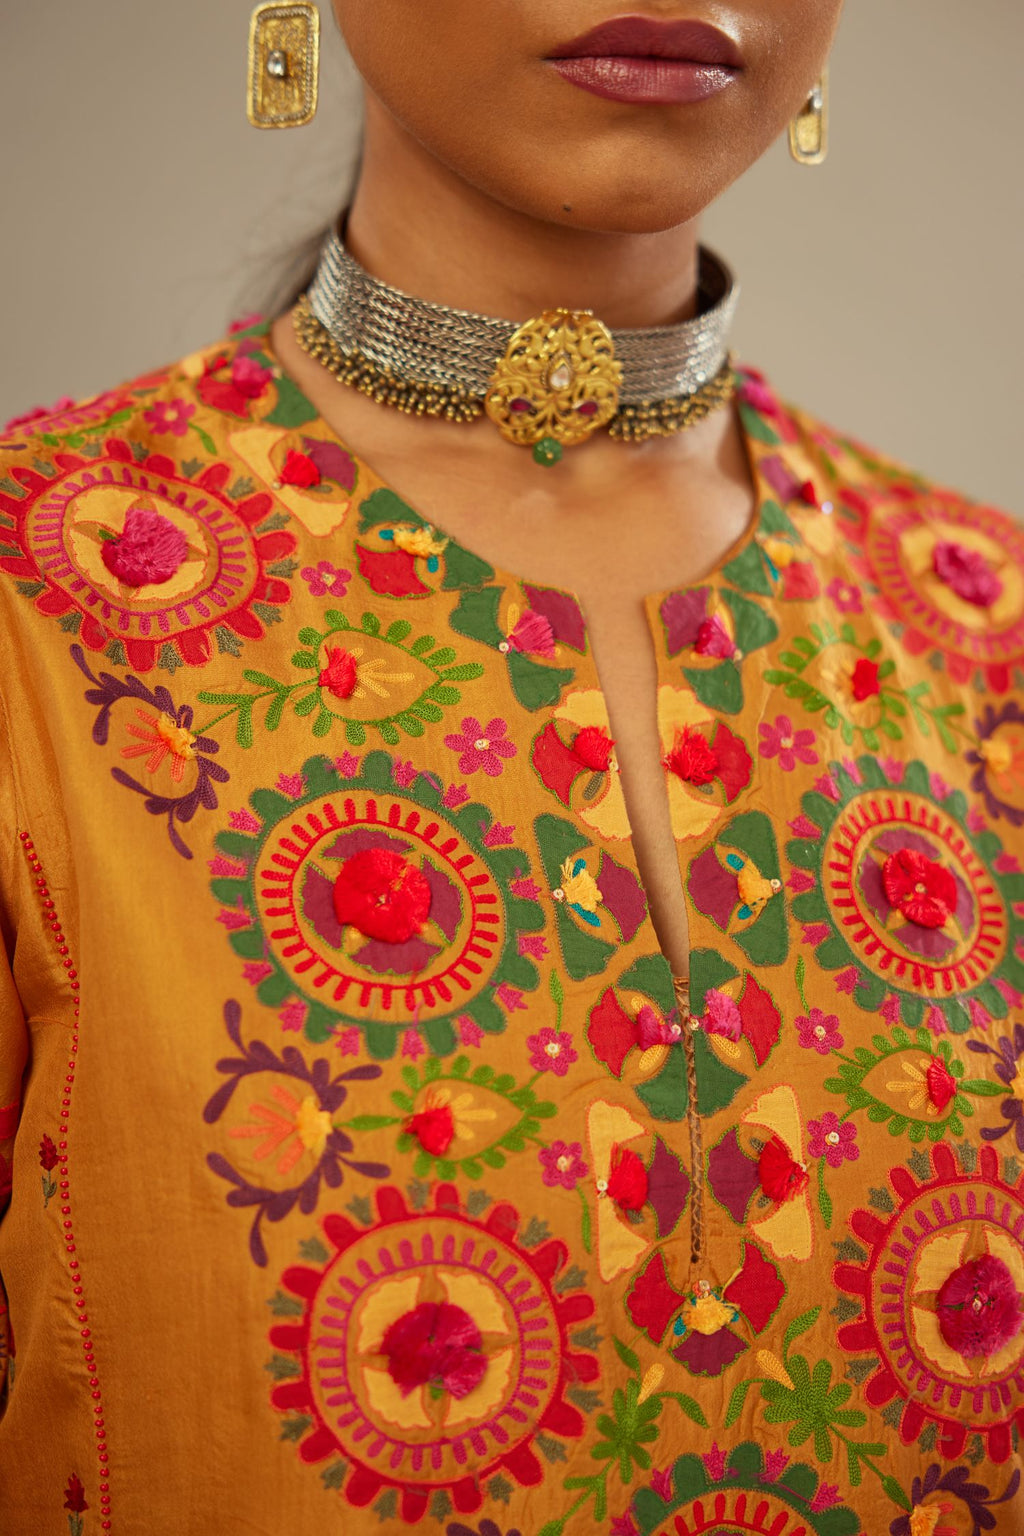 Mustard kalidar straight kurta set, fully embroidered with appliqué flowers, multi-colored aari threadwork and silk tassels.